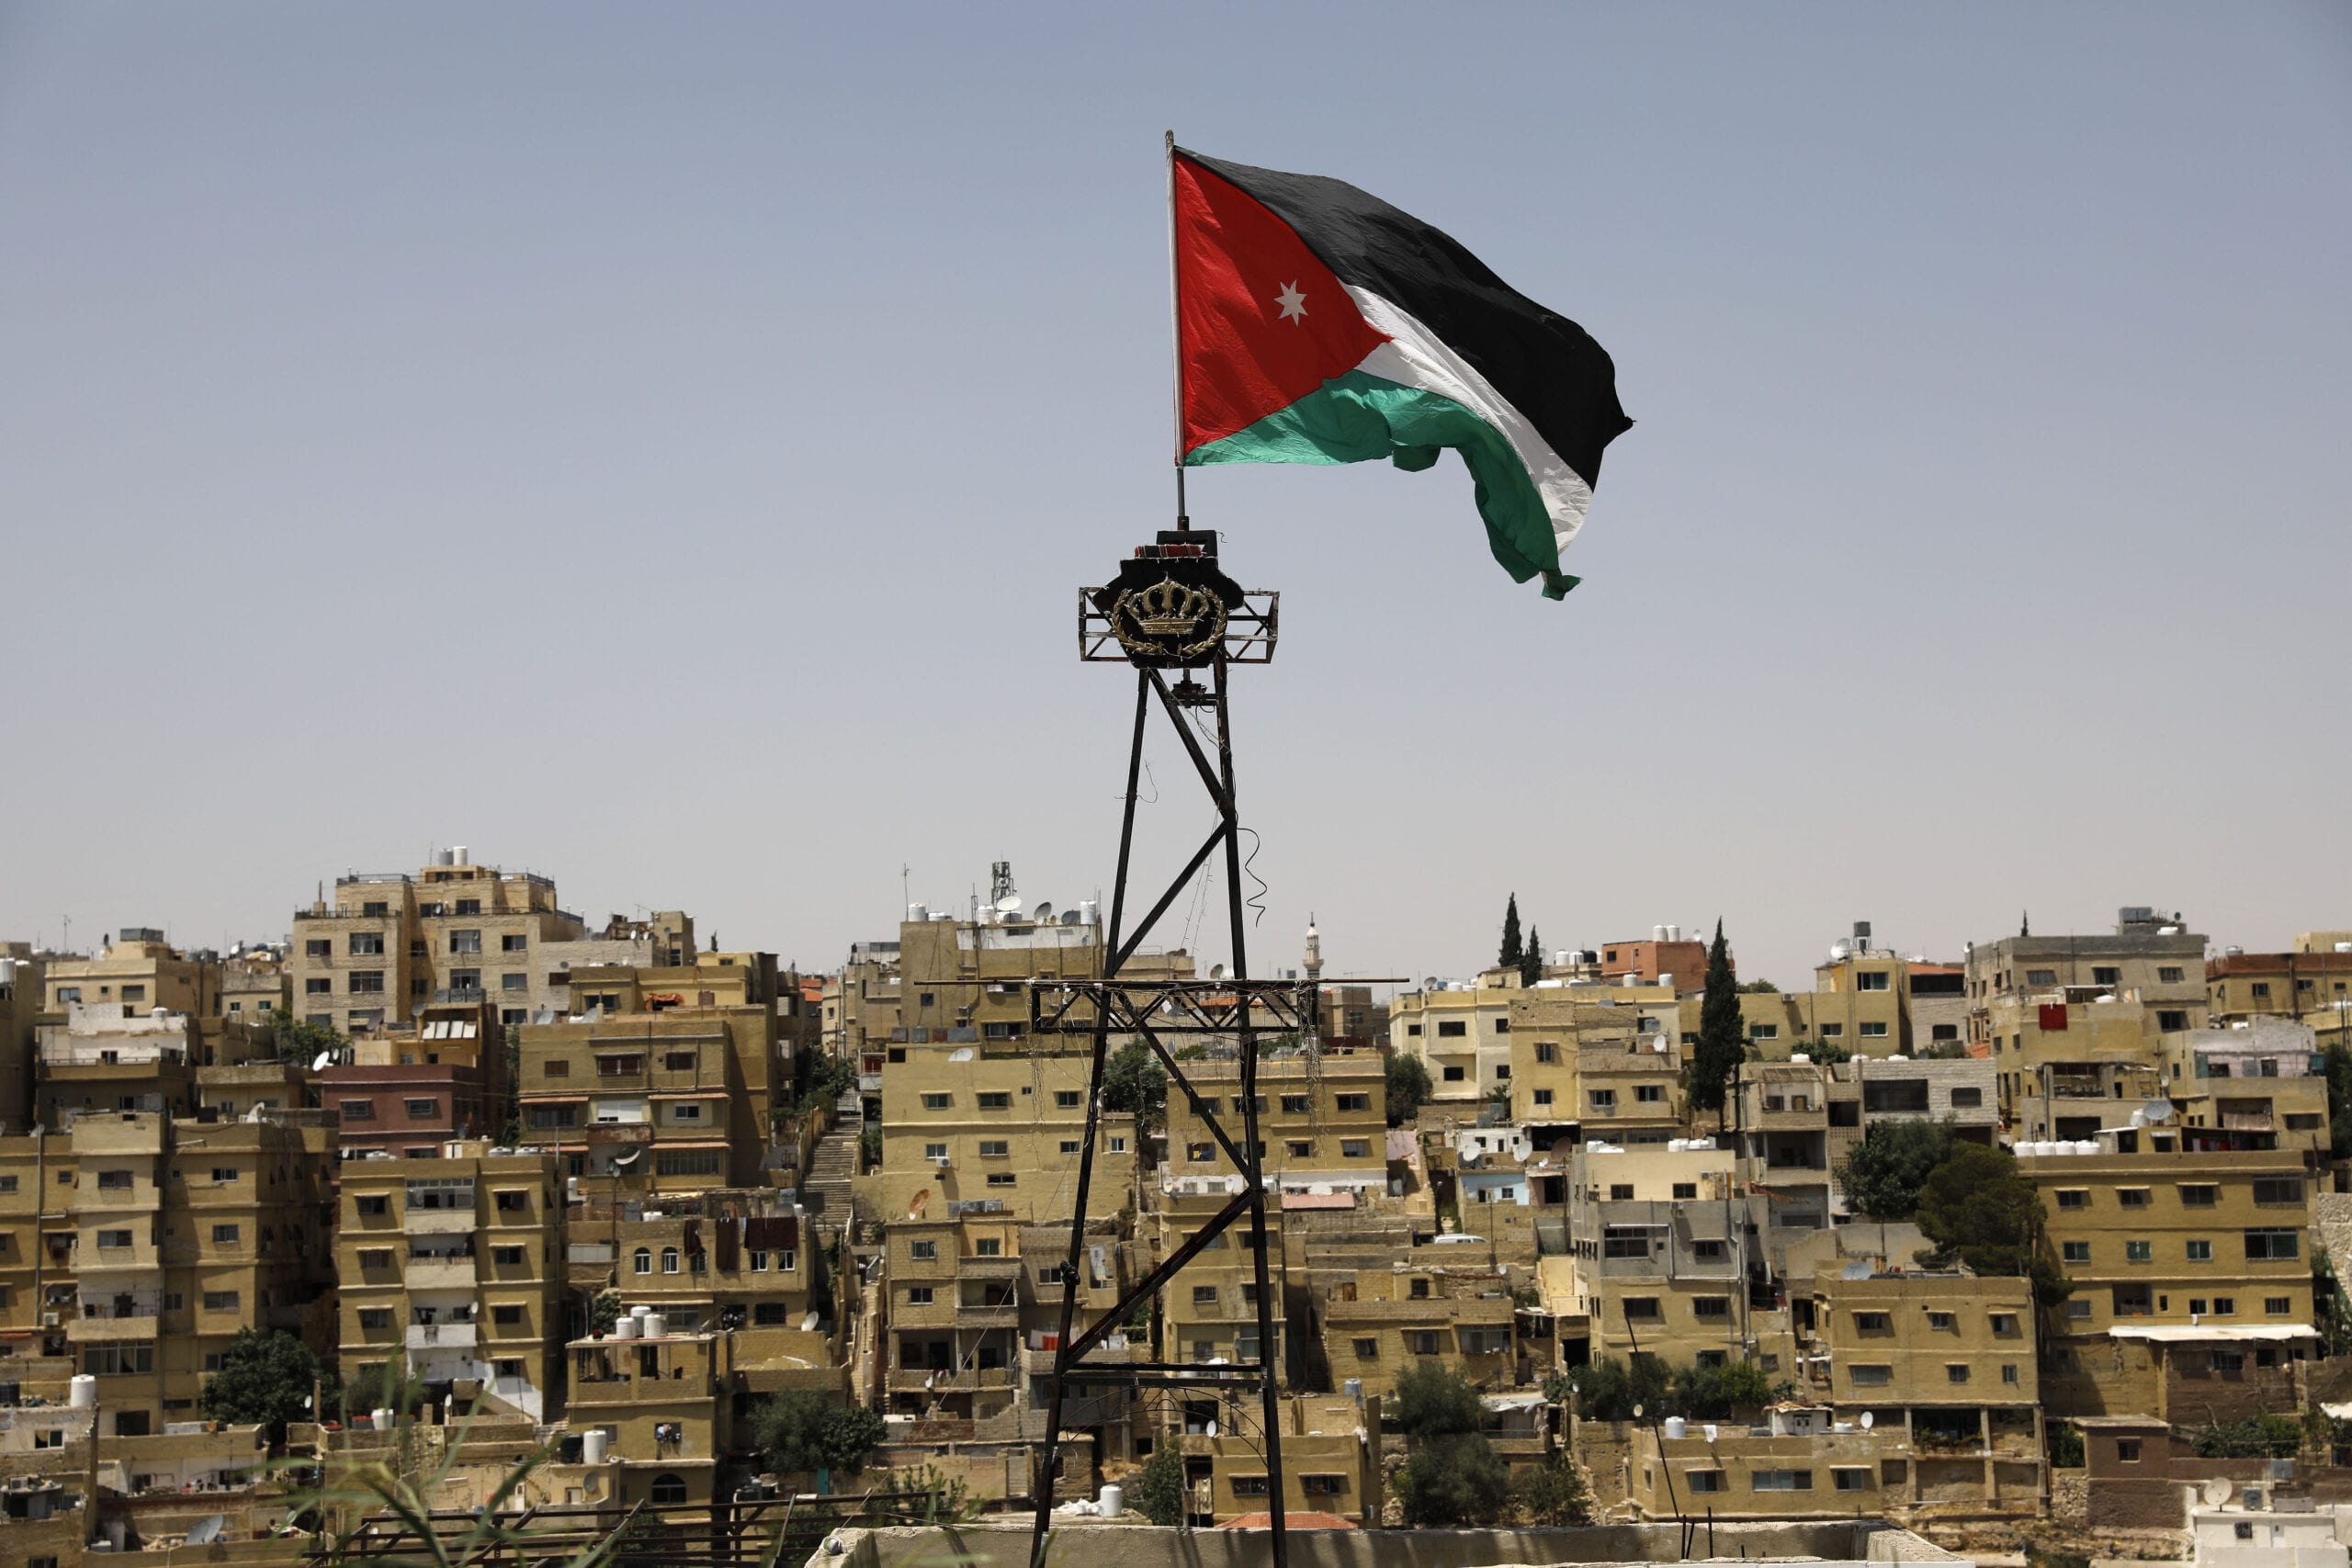 A general view taken from Jabal al-Qala district shows a Jordanian flag fluttering above the Jordanian capital Amman [AHMAD GHARABLI/AFP via Getty Images]